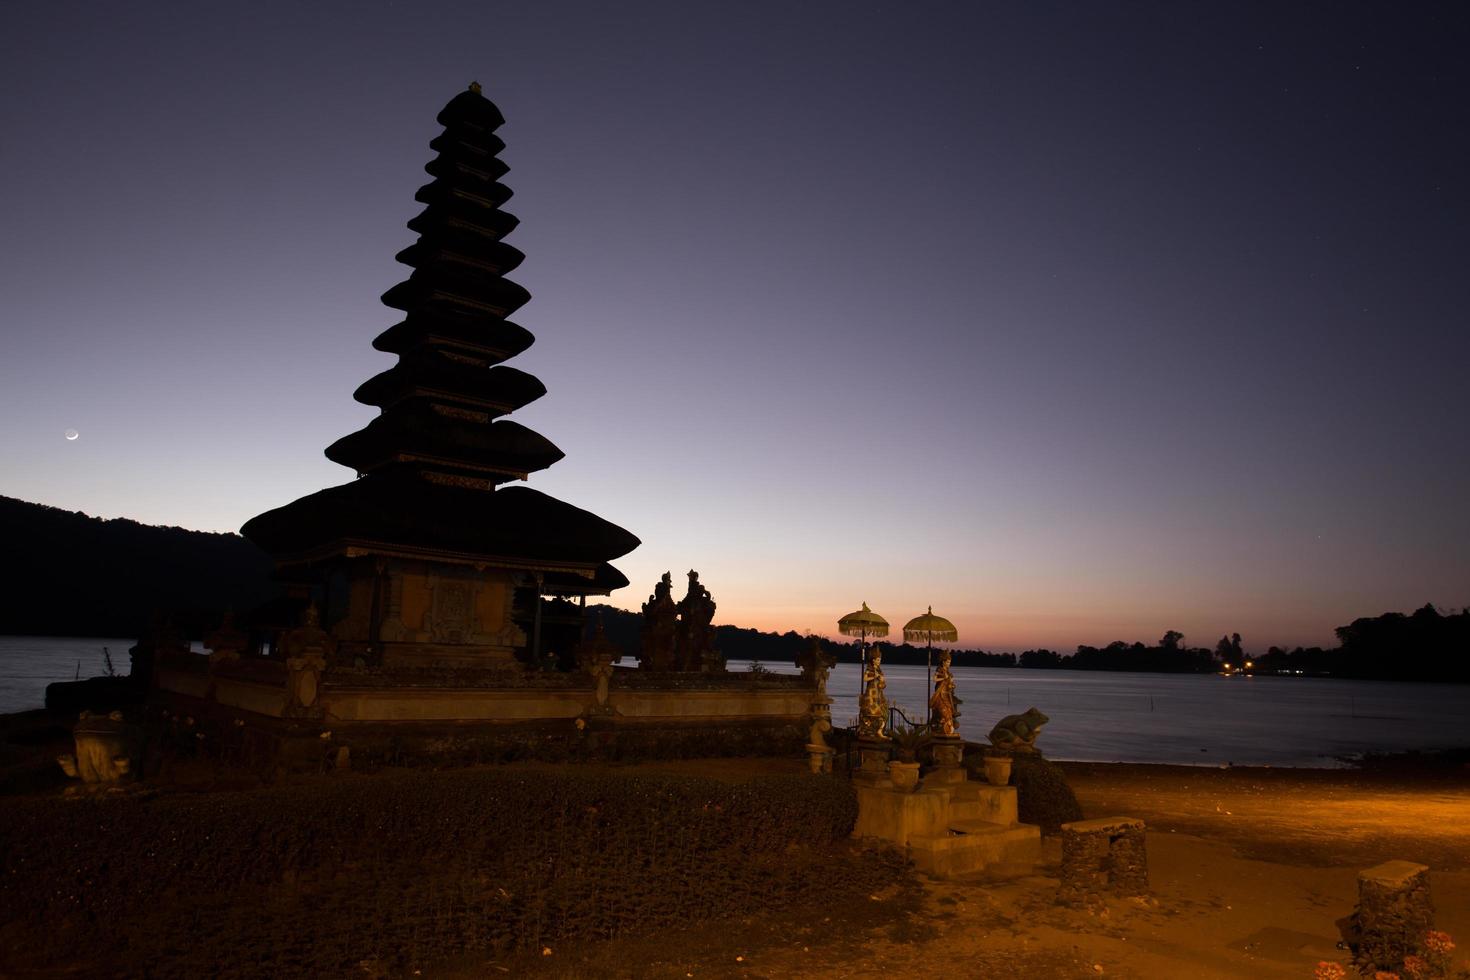 Pura Ulun Danu temple silhouette photo